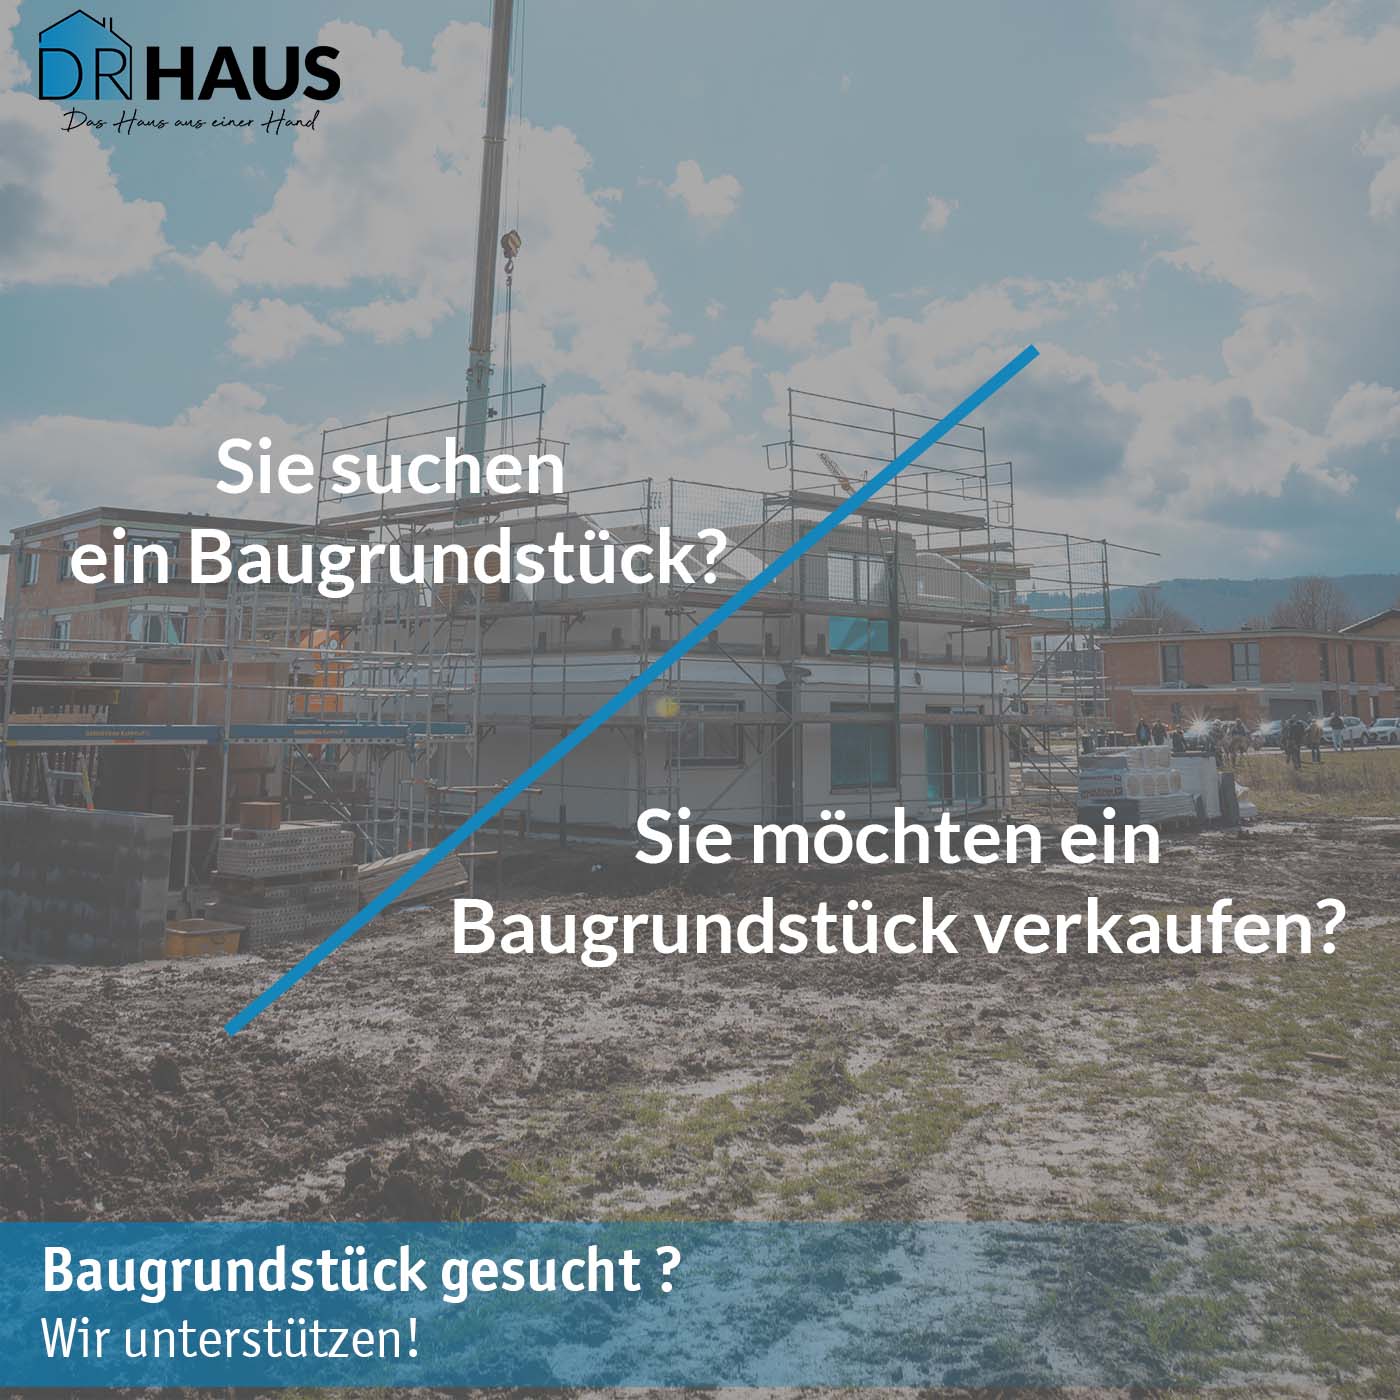 You are currently viewing Baugrundstücke sind gefragter denn je..